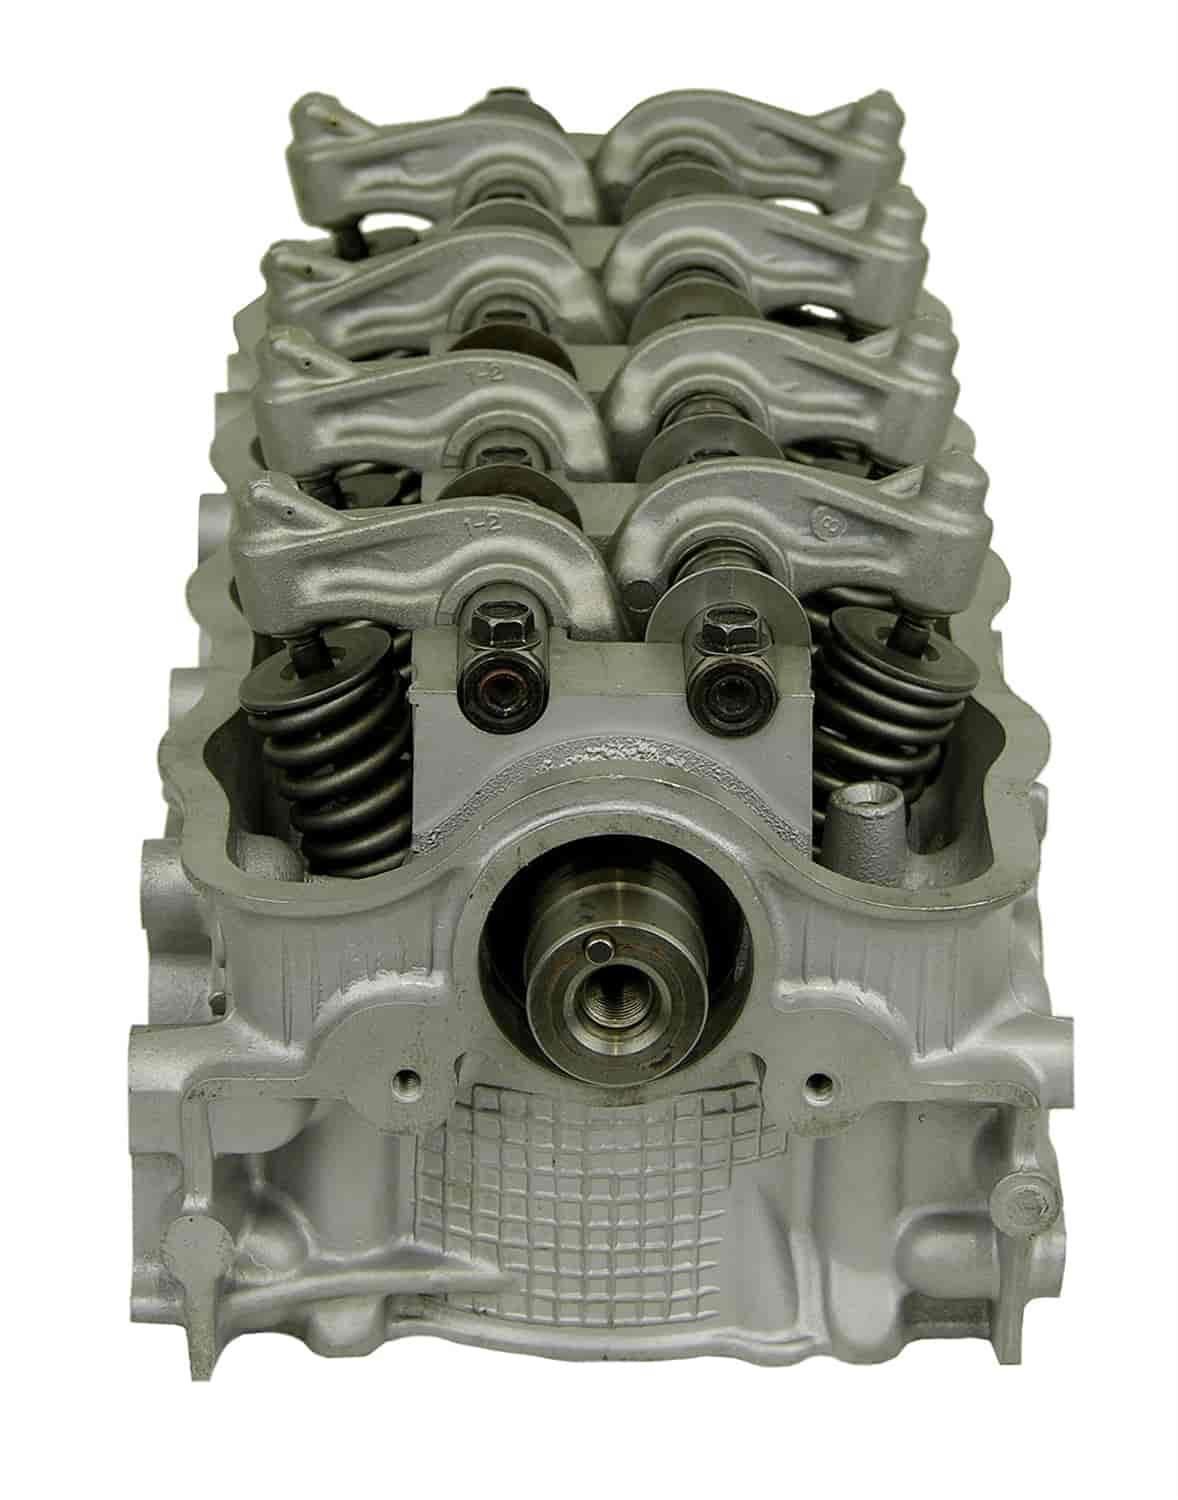 Remanufactured Crate Engine for 1995-1997 Chevy/Pontiac/Suzuki with 1.3/1.6L L4